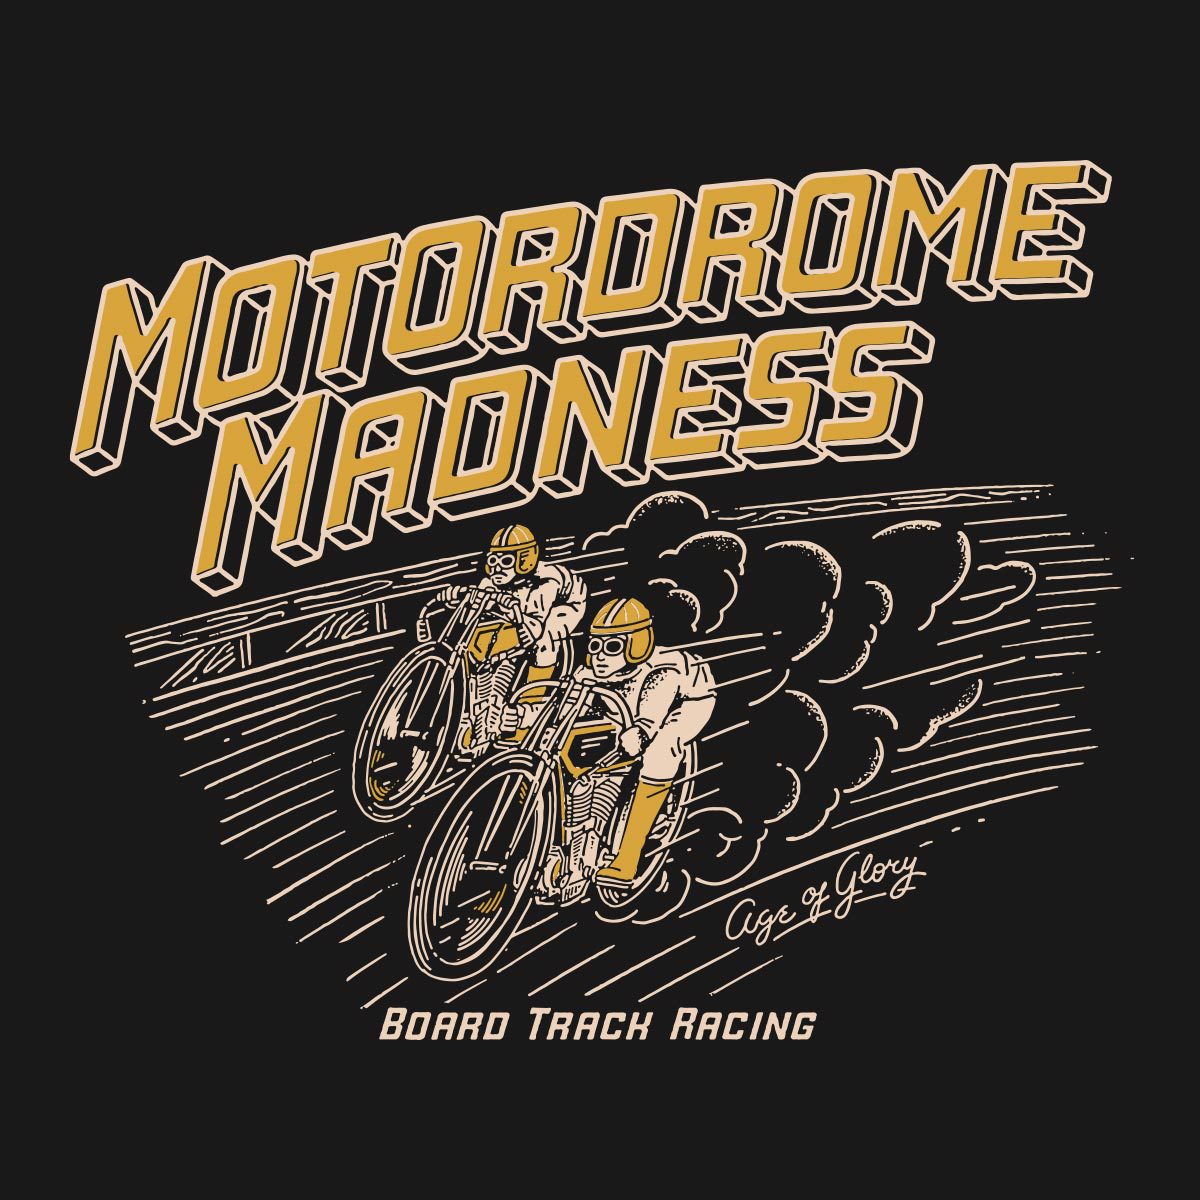 Age of Glory Motordrome T-Shirt